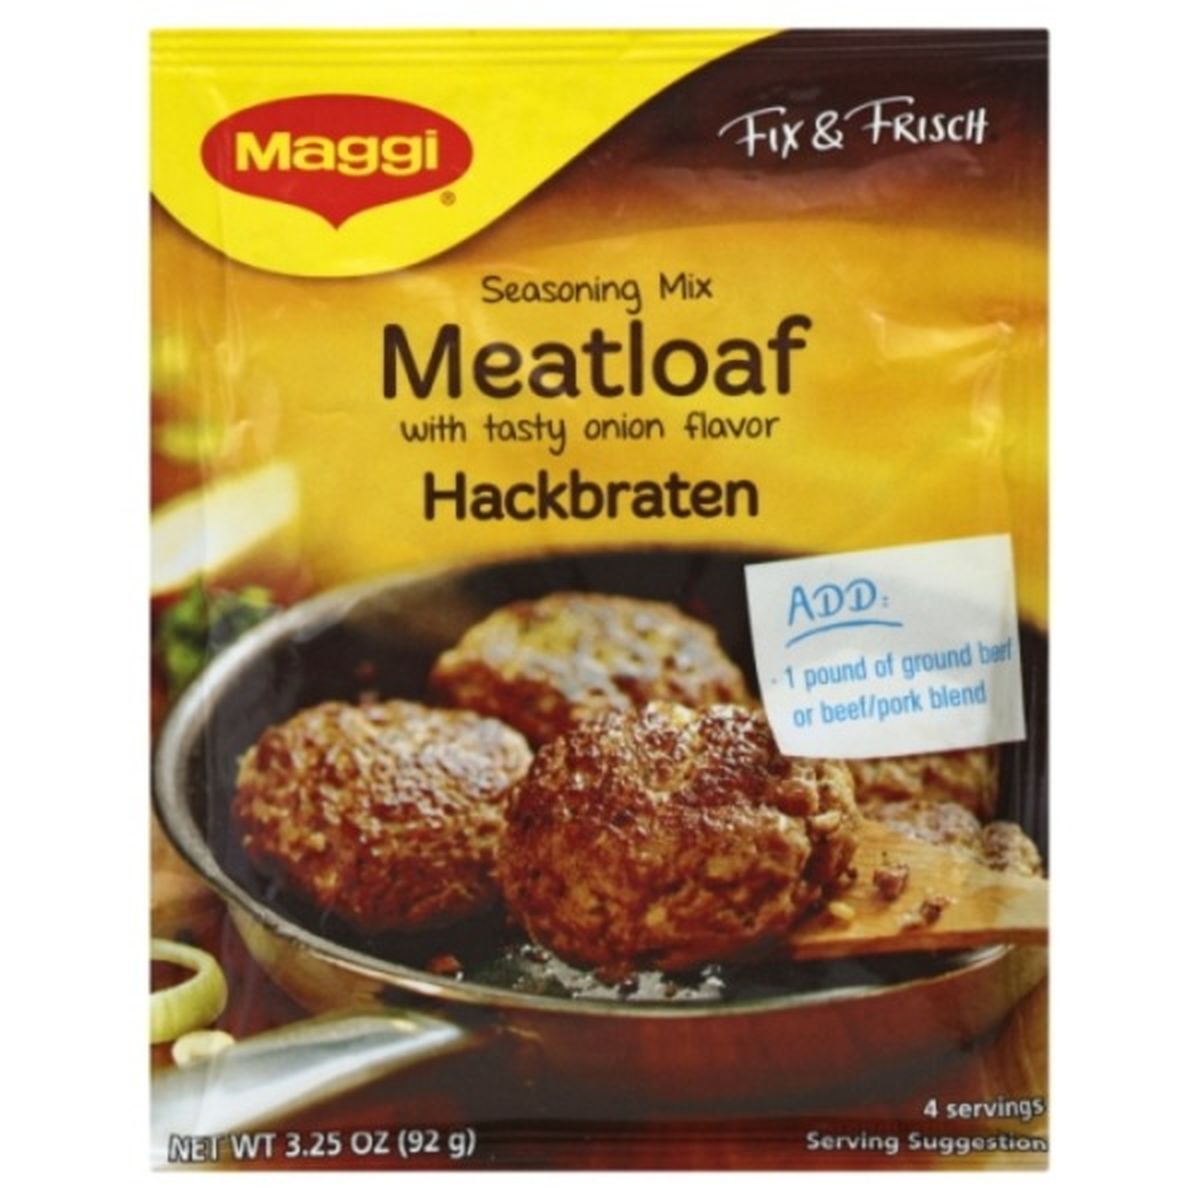 Calories in Maggi Seasoning Mix, Meatloaf, Hackbraten